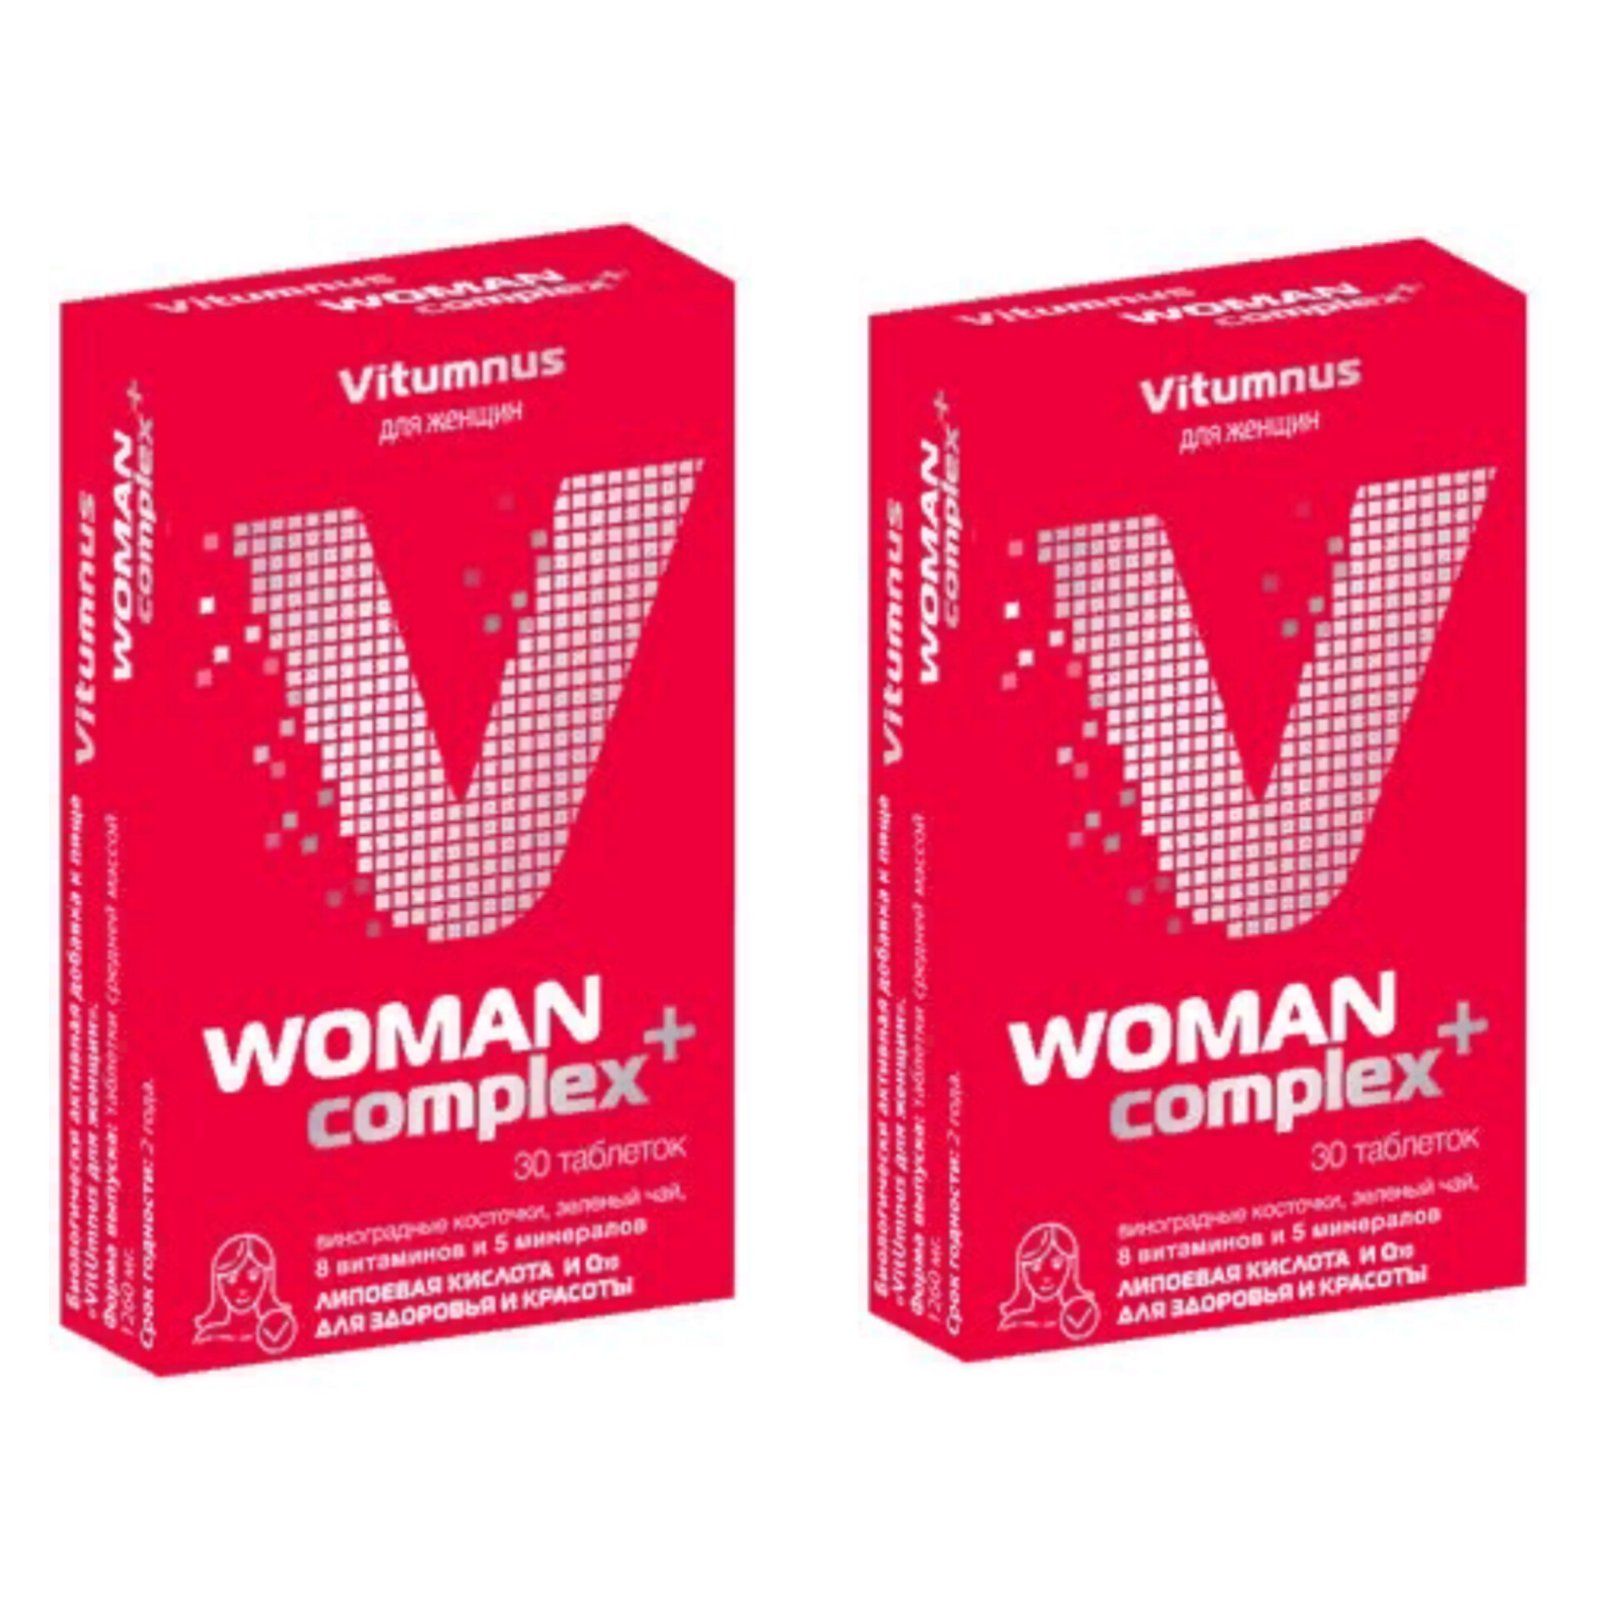 Vitumnus д3 витамин. Vitumnus витаминно минеральный комплекс. Vitumnus витамины для женщин. Vitumnus man Complex. Vitumnus таблетки для женщин.